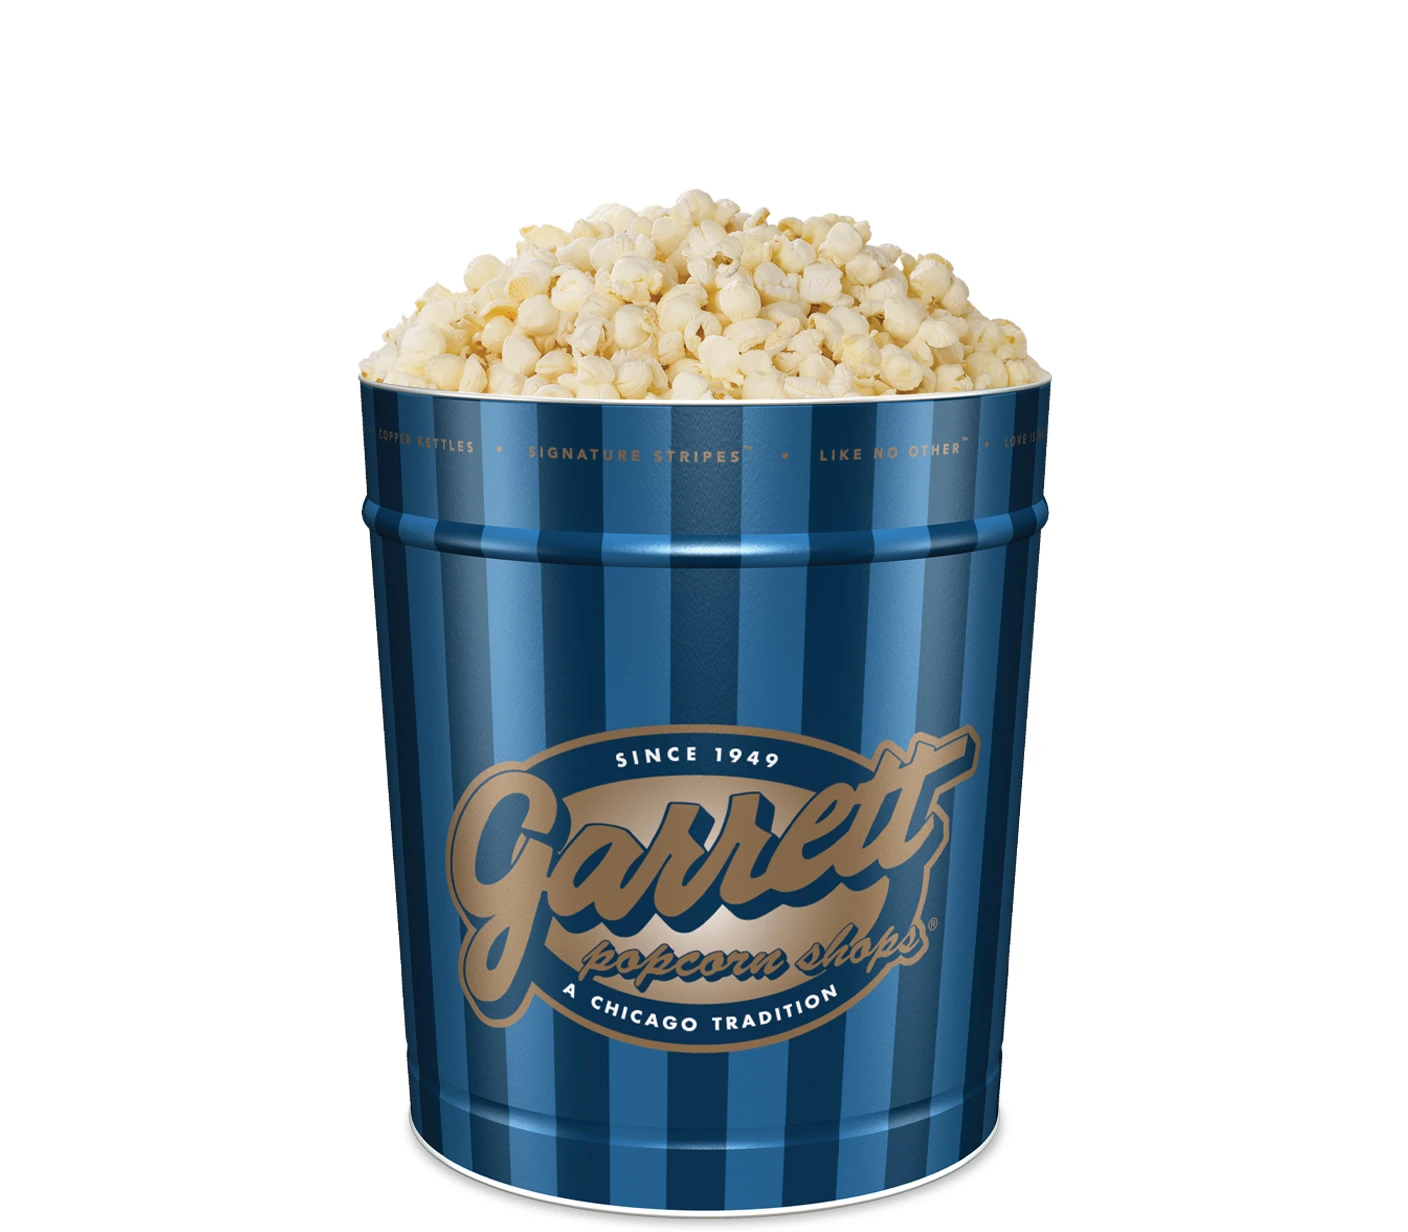 Garrett Mix Popcorn - Bestseller